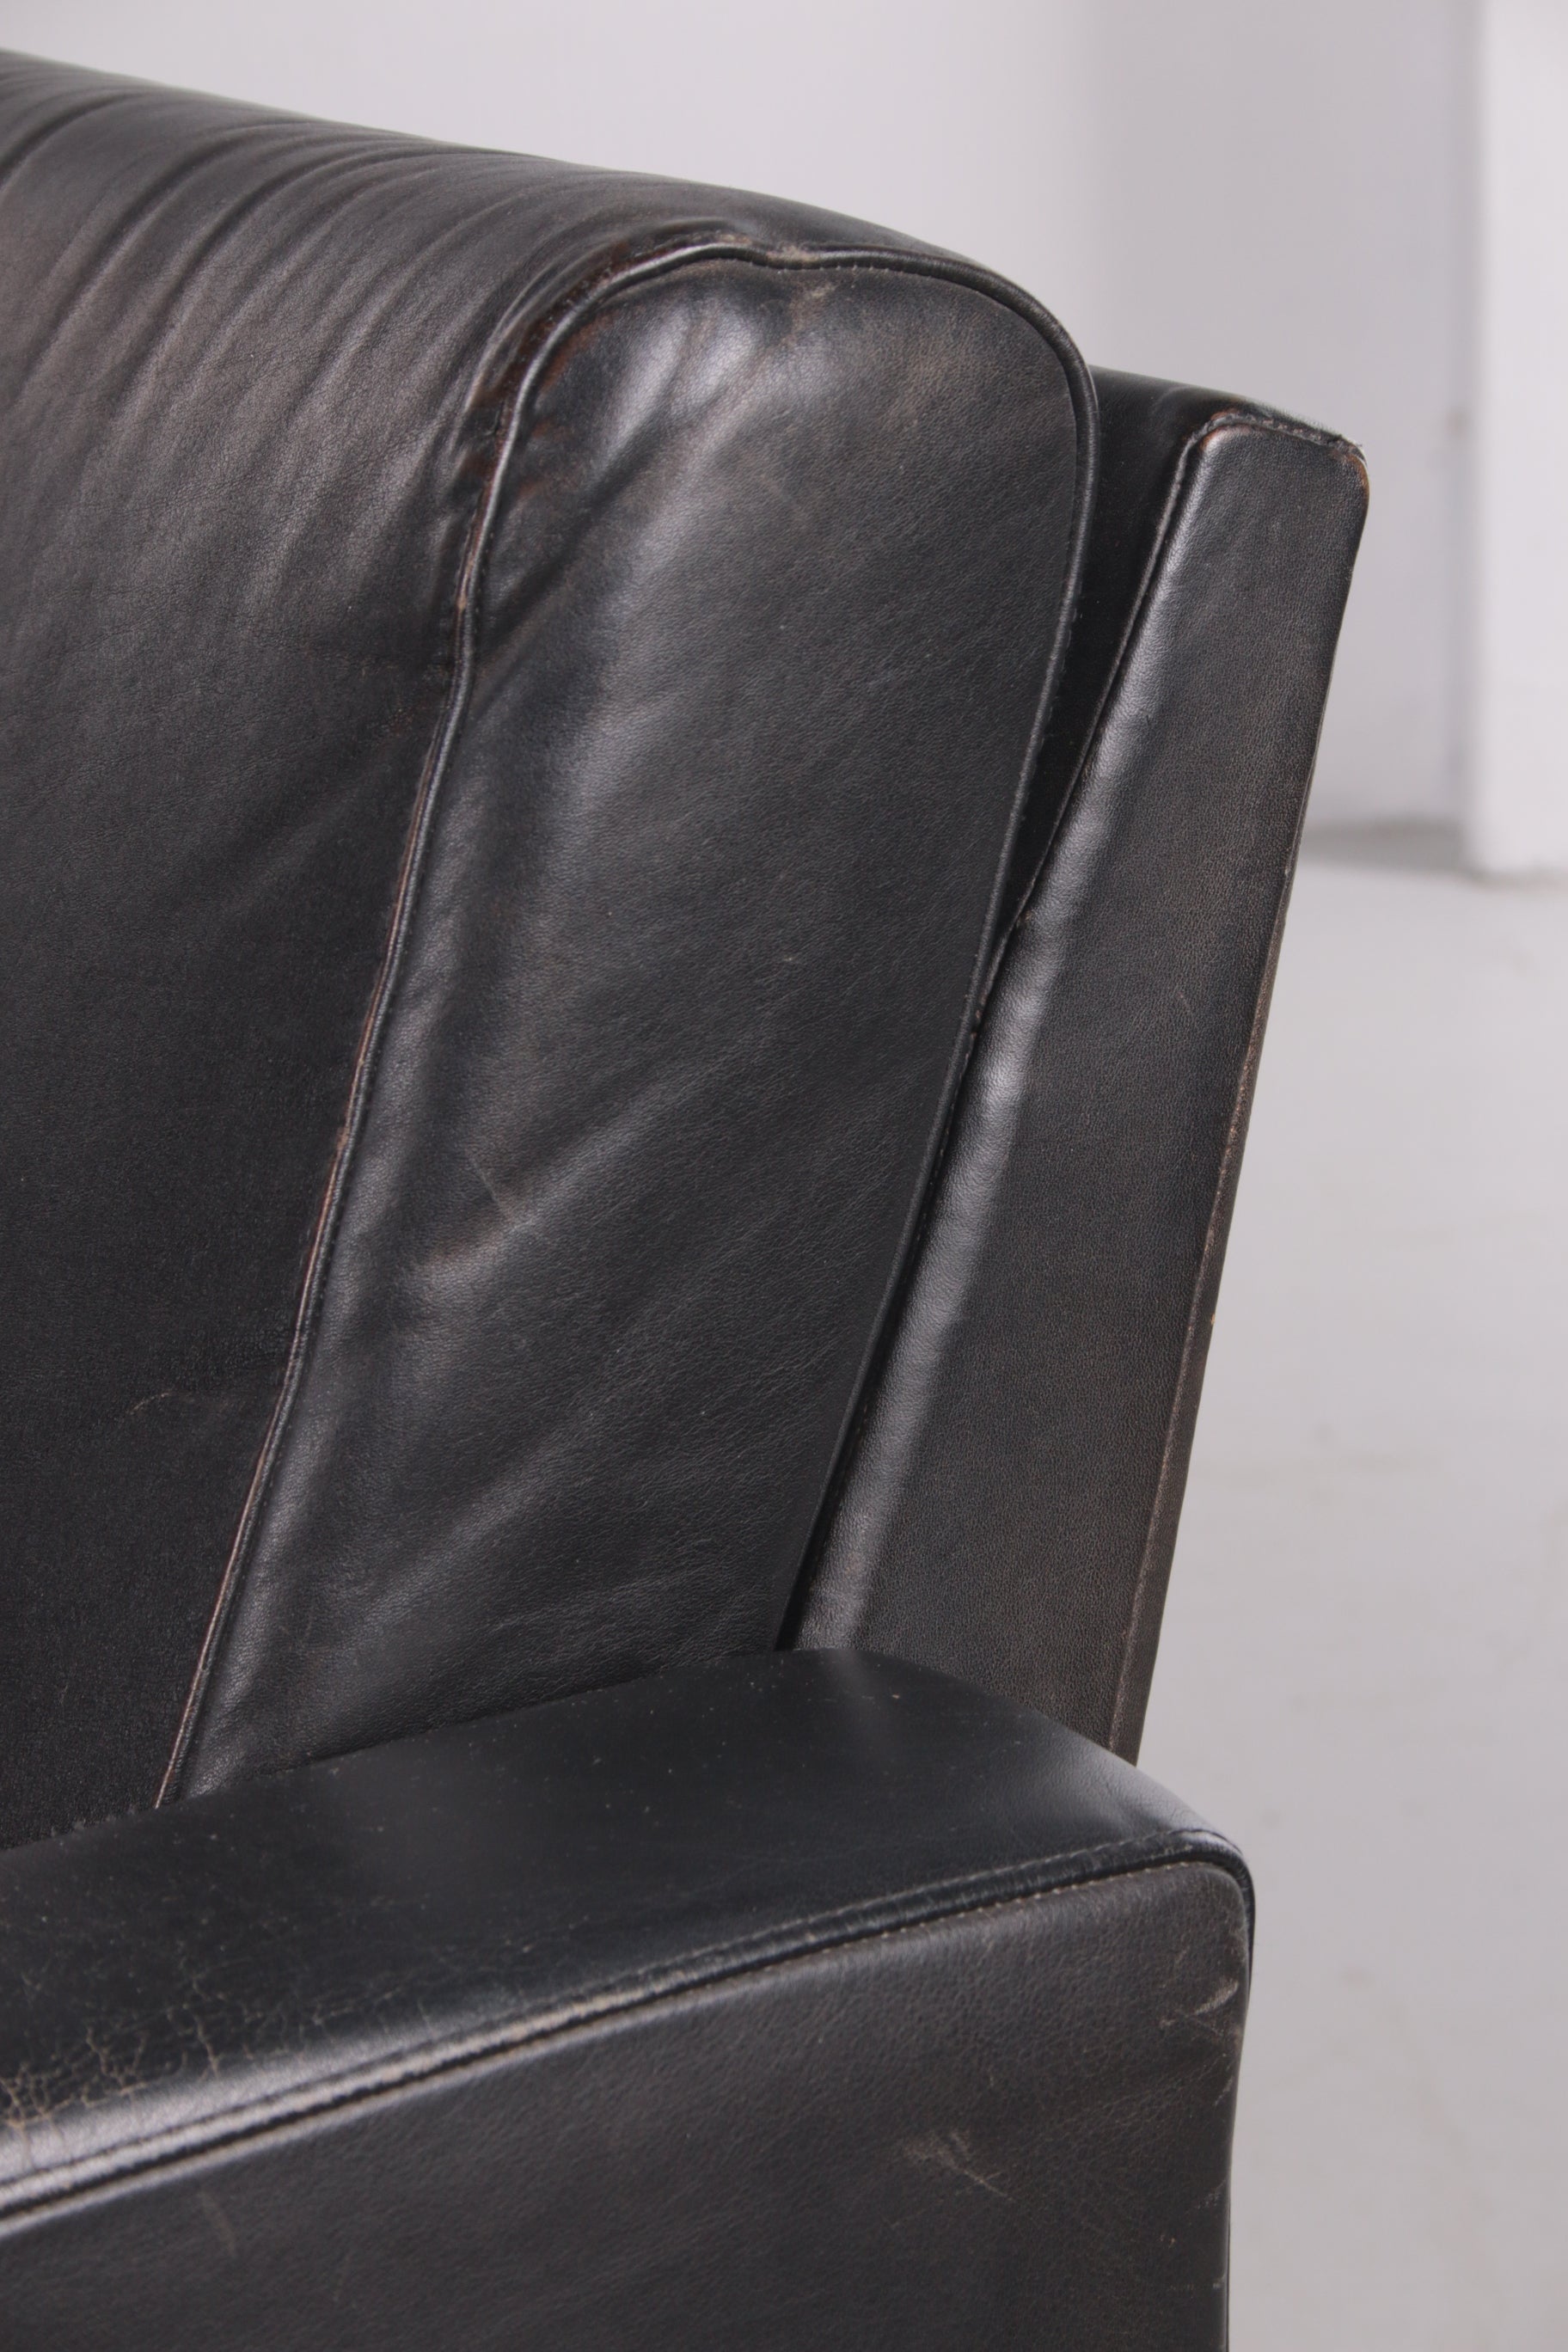 Vintage Dutch design leather 'BZ55' sofa by Martin Visser rugleuning